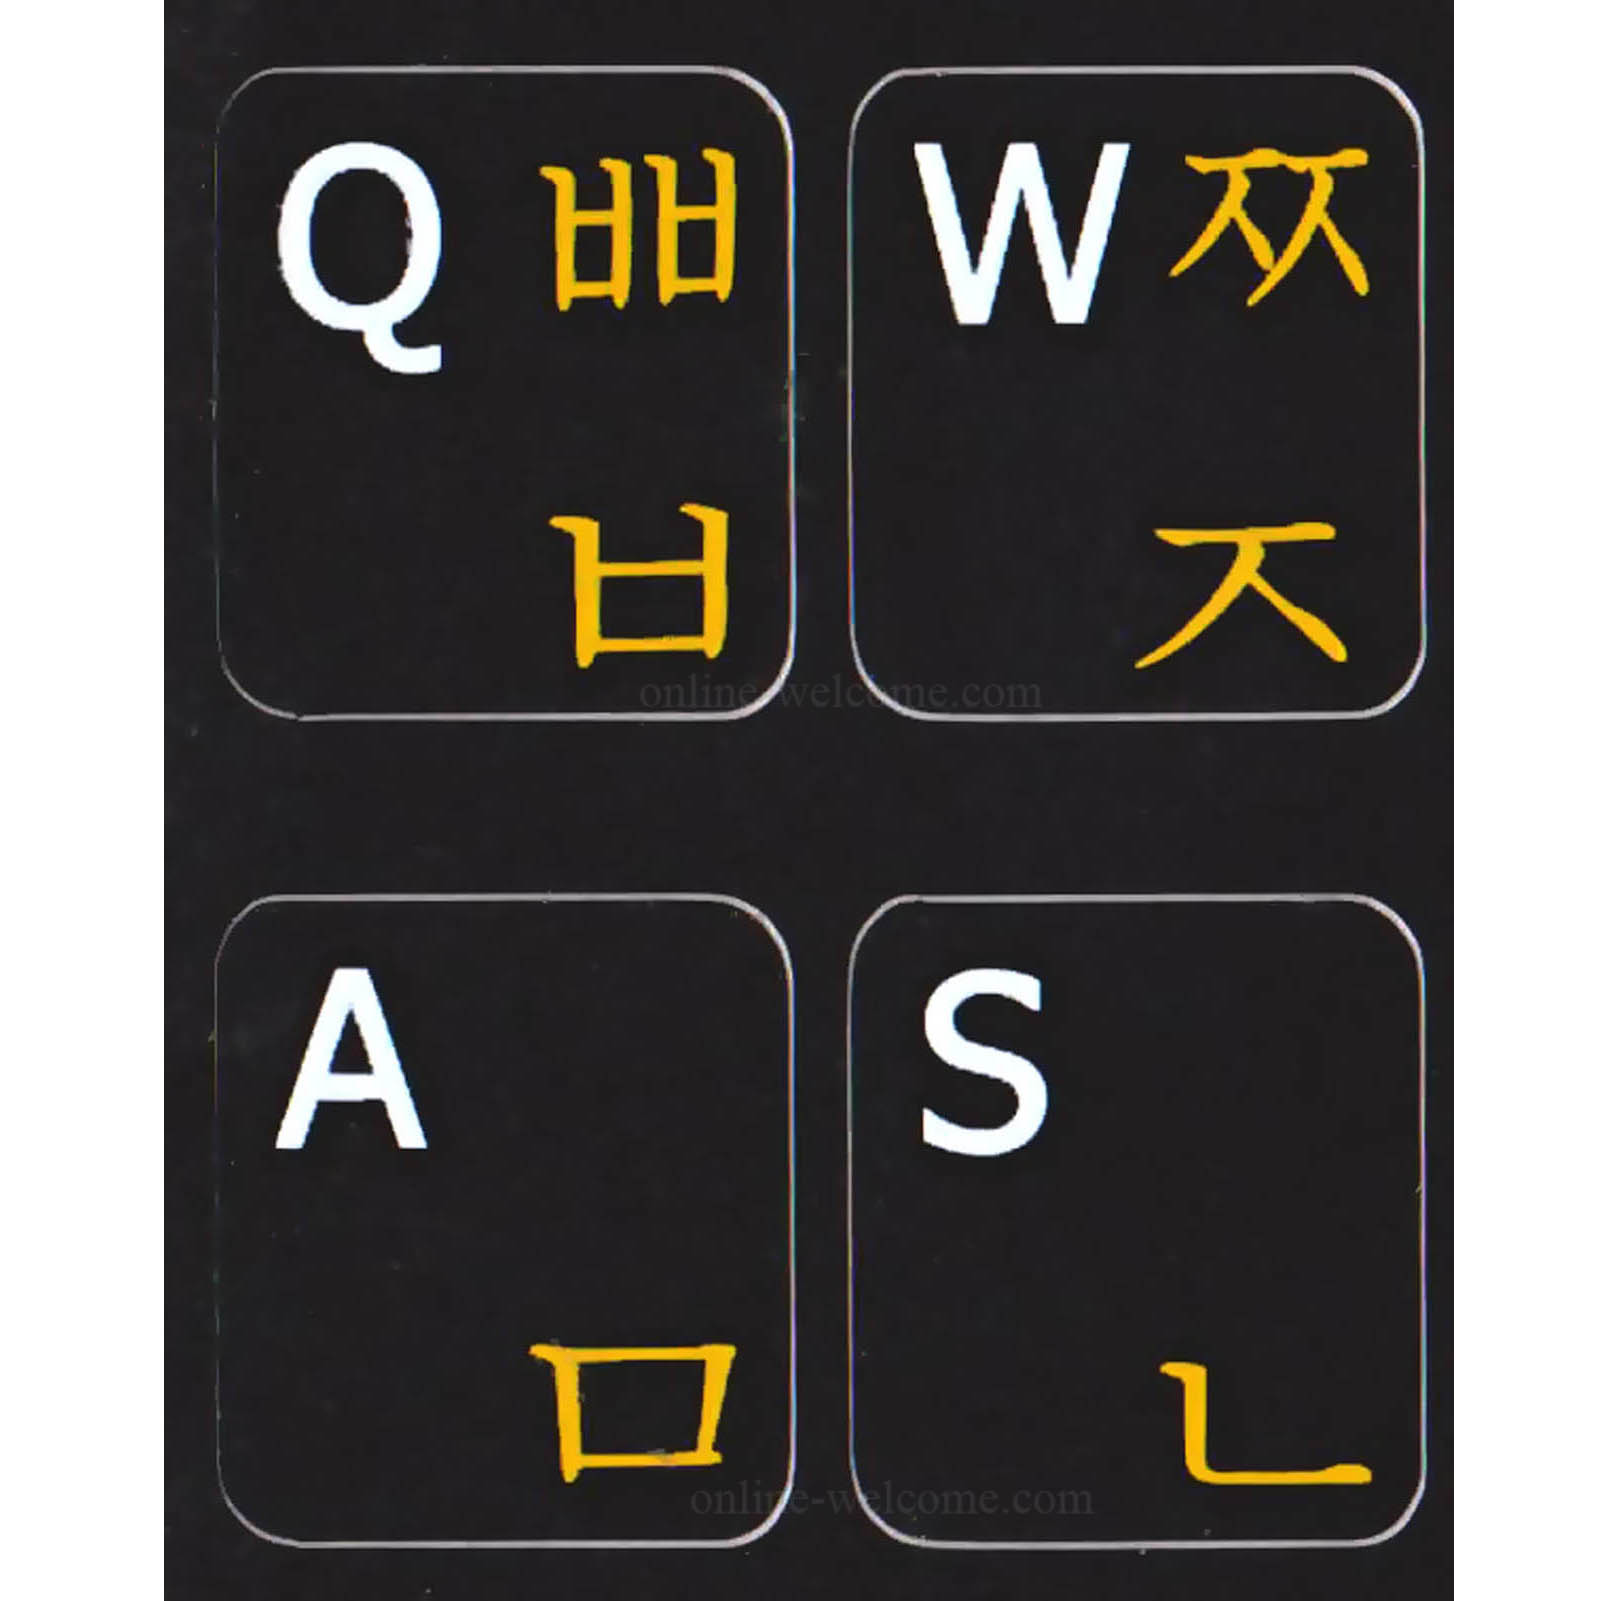 translate korean to english keyboard